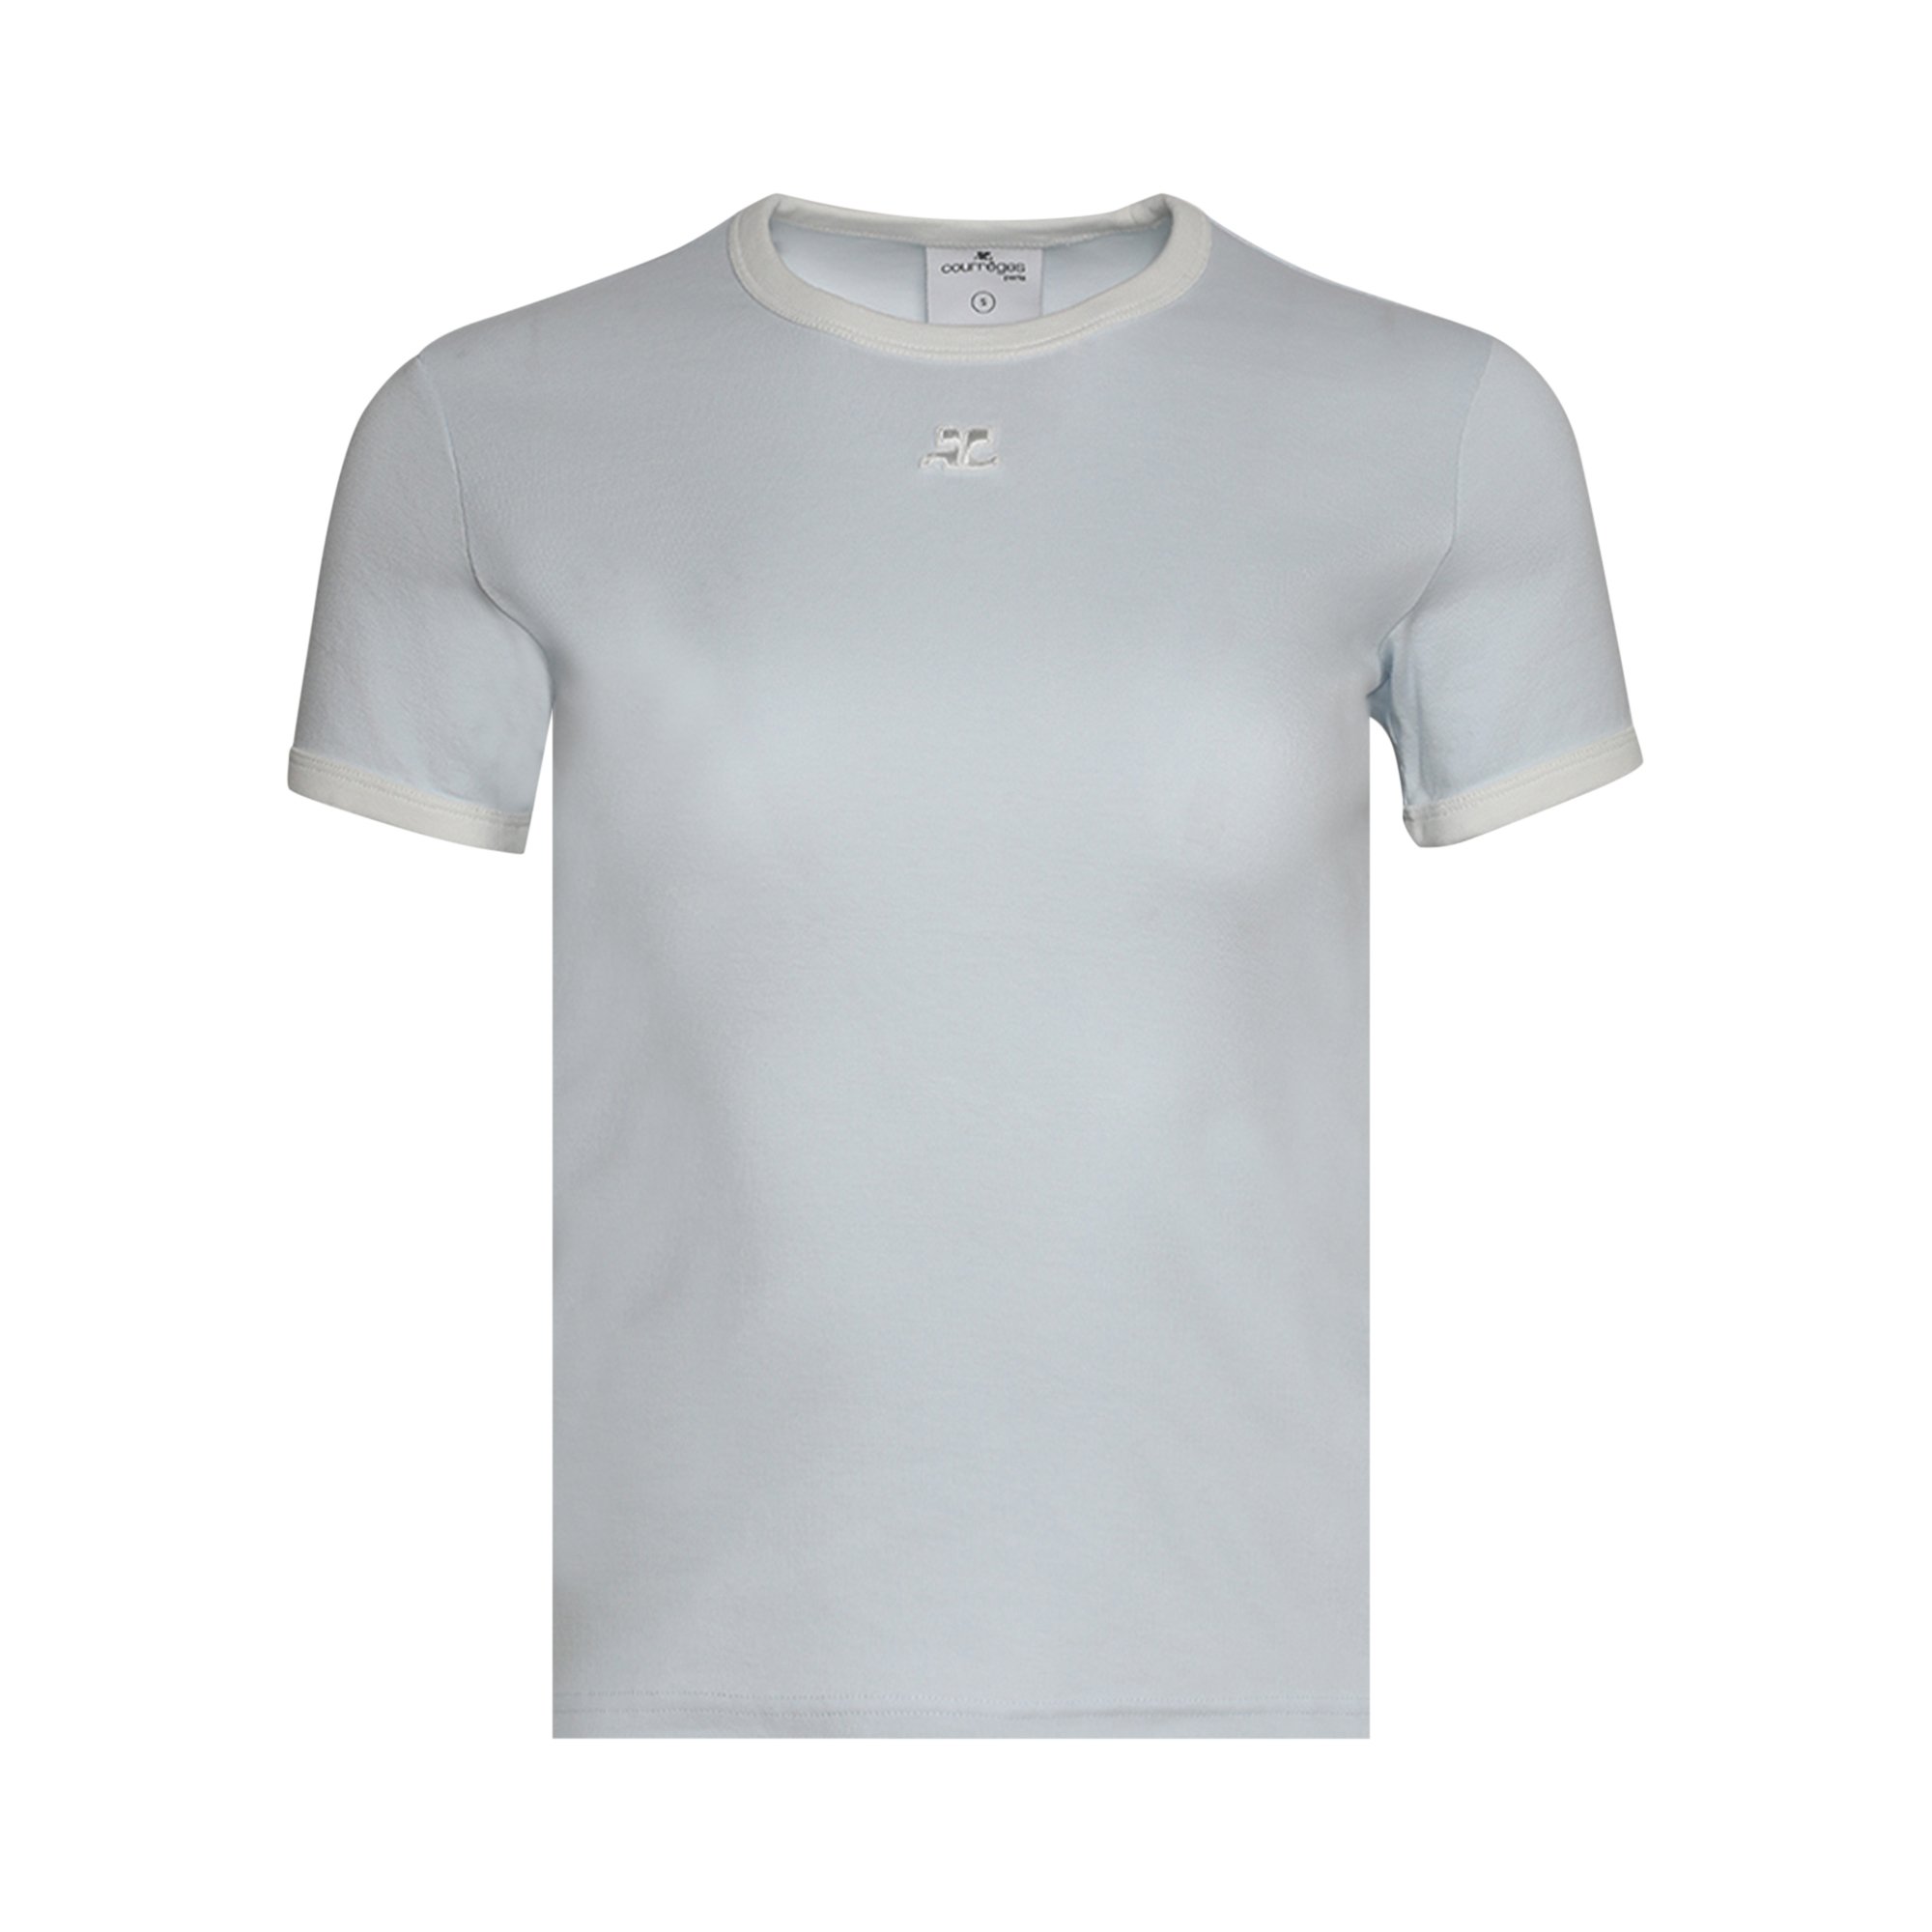 Courrèges Bumpy Contrast T-Shirt 'Ice Blue/Heritage White'